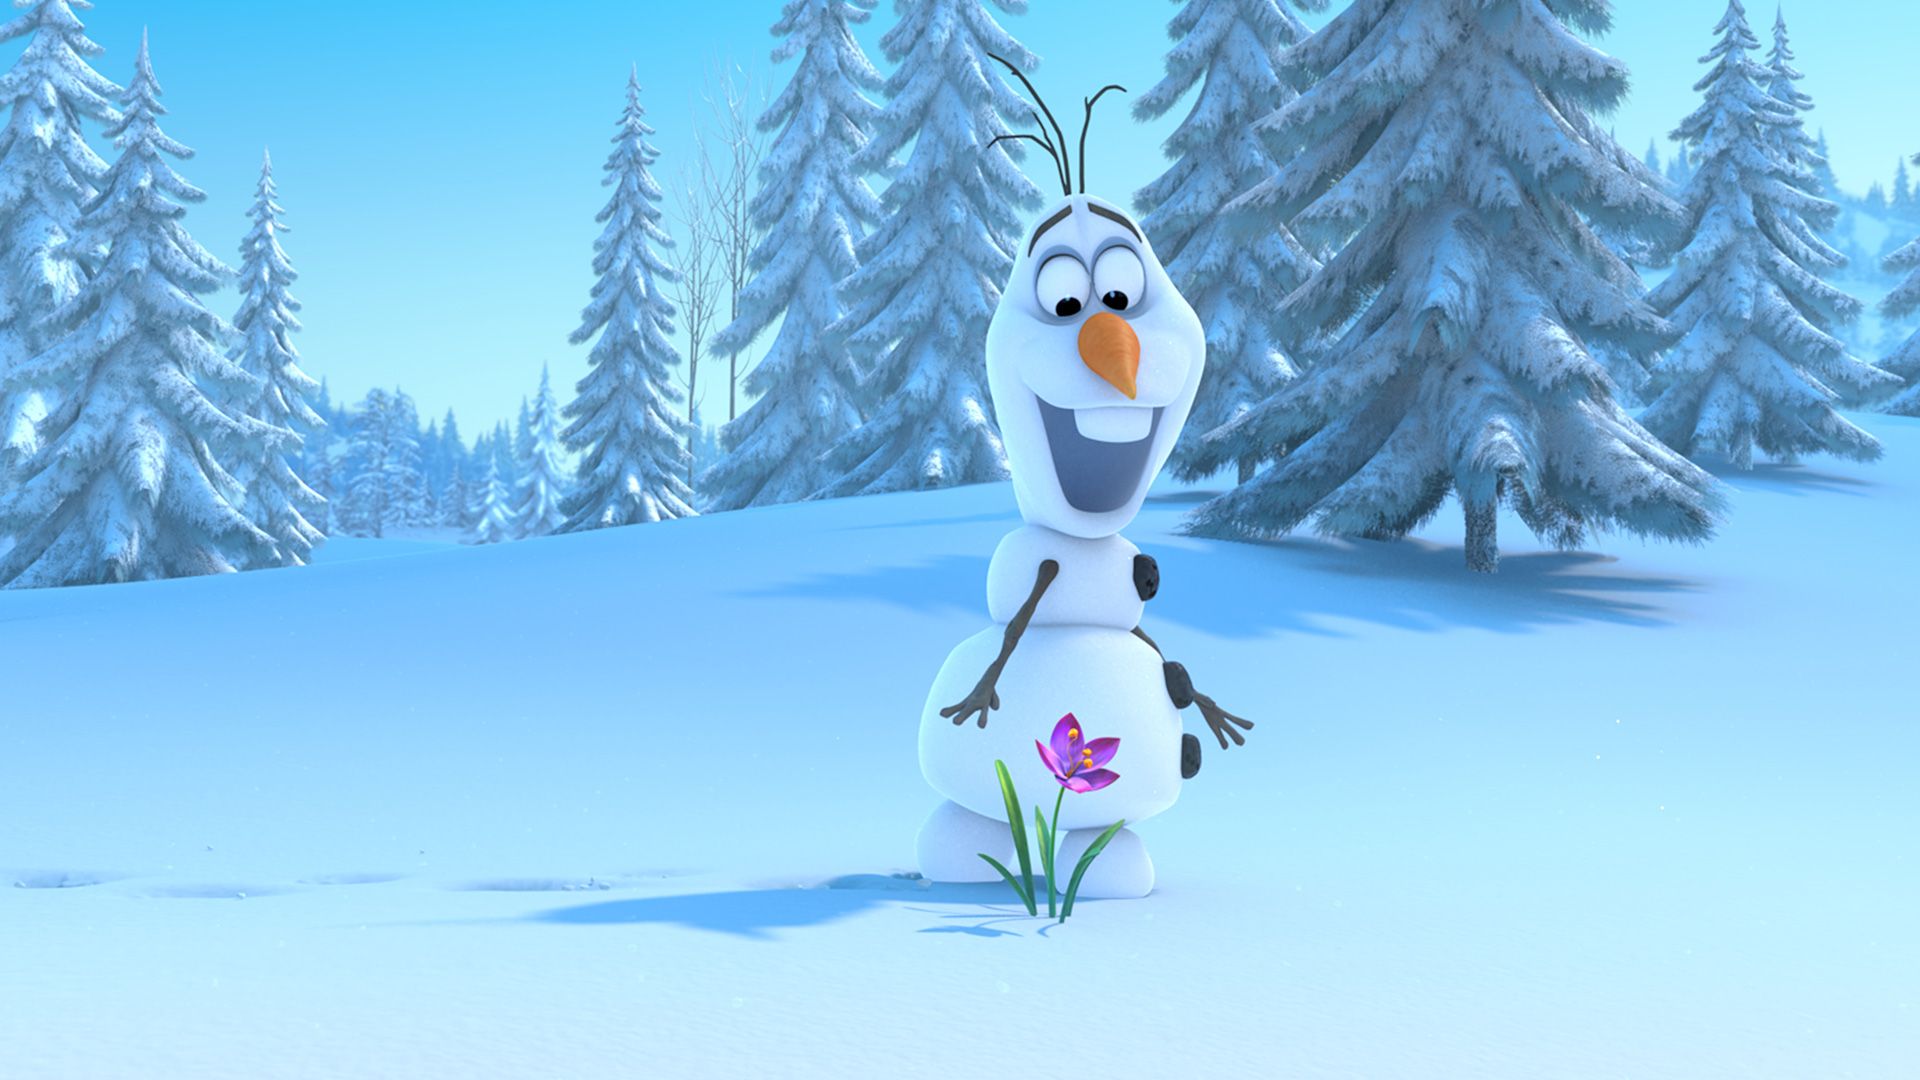 Frozen (2013) | Pictures | Official Disney UK Site | Disney ...